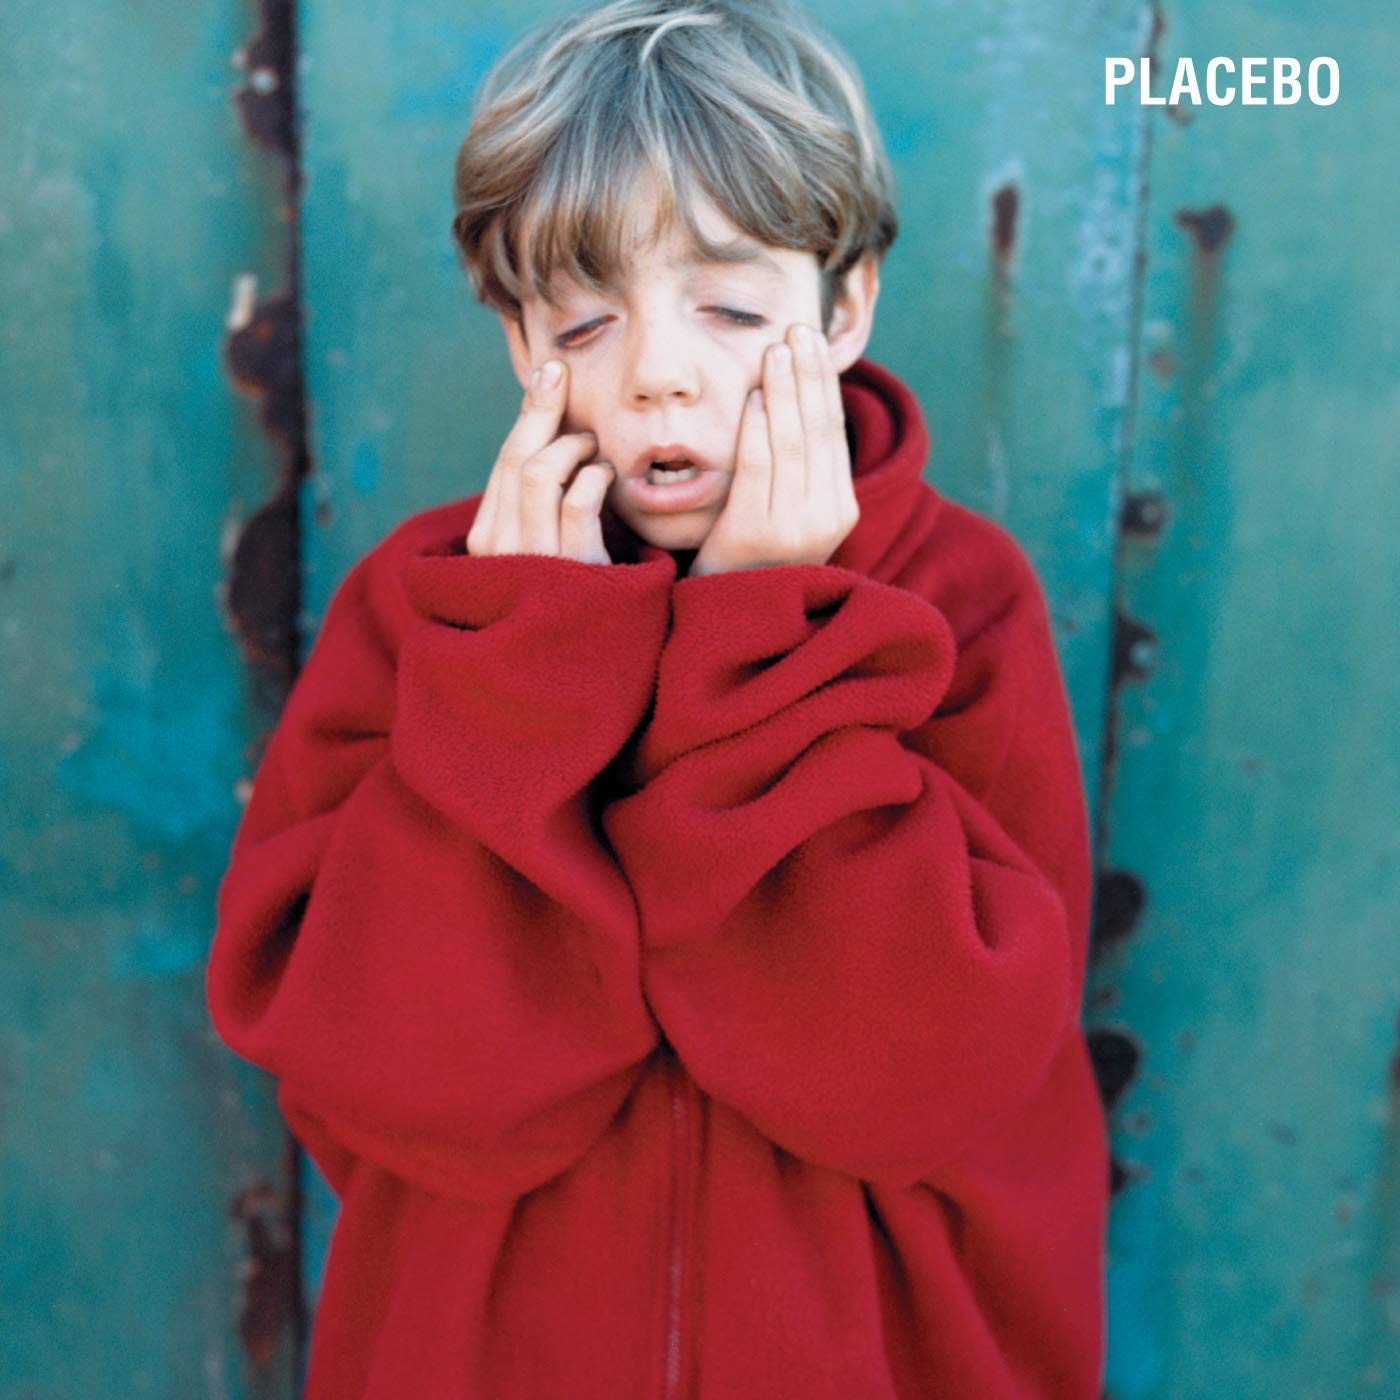 Placebo - Placebo vinyl cover